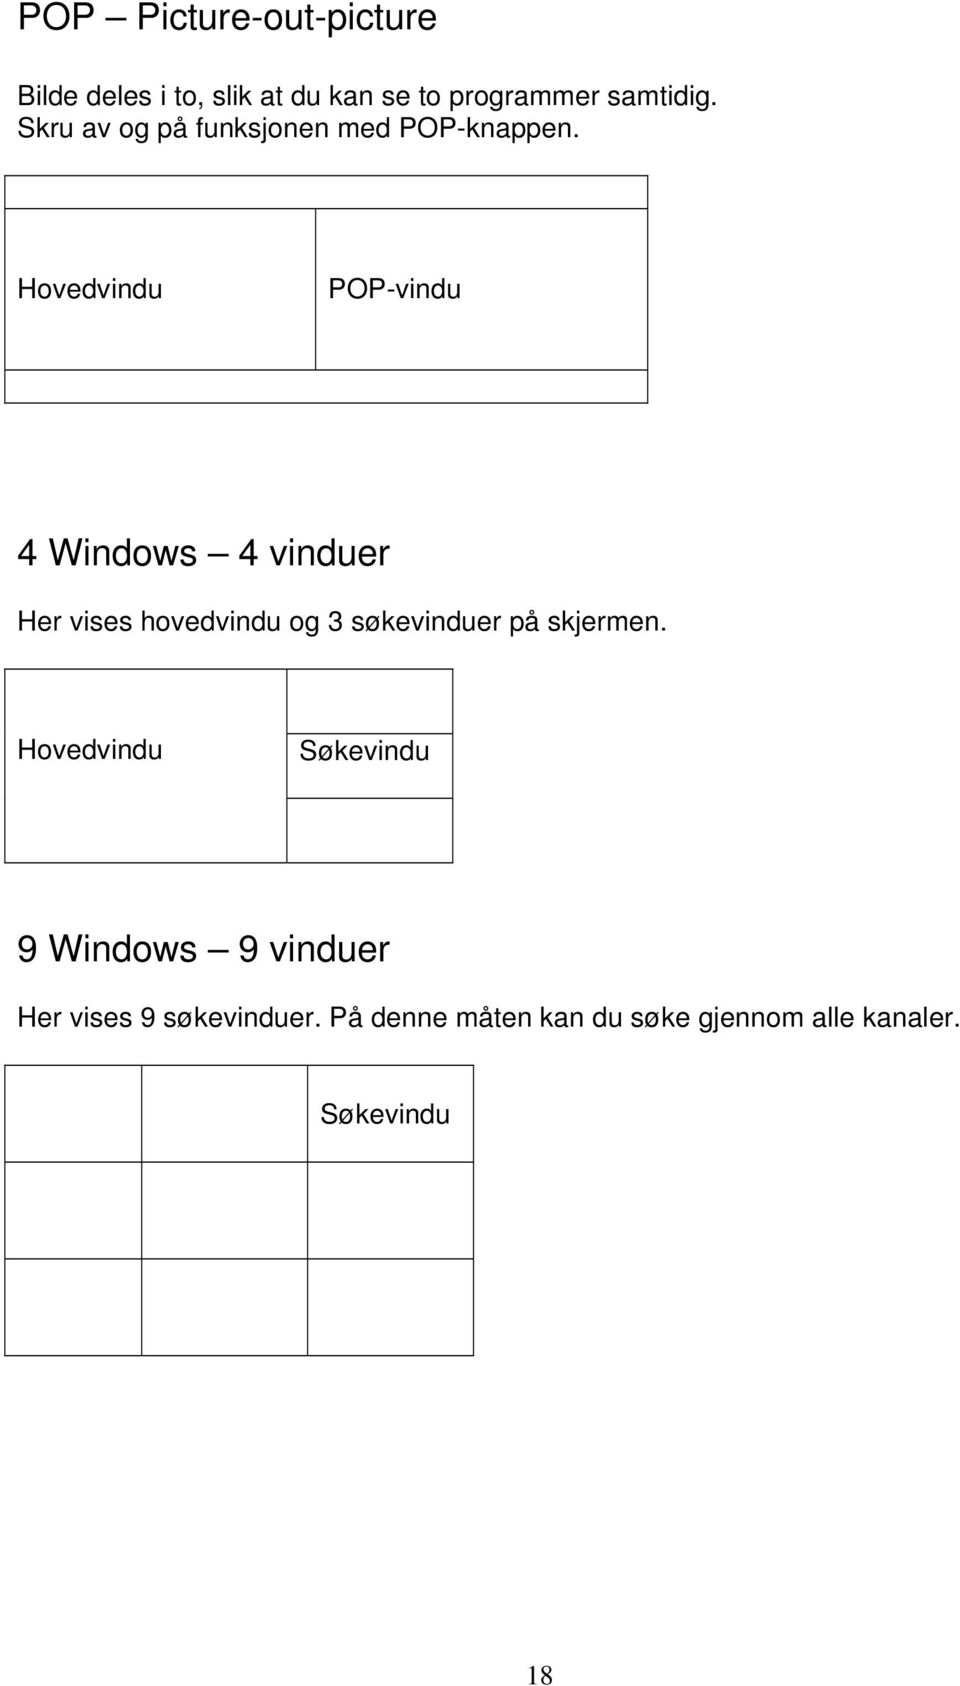 Hovedvindu POP-vindu 4 Windows 4 vinduer Her vises hovedvindu og 3 søkevinduer på